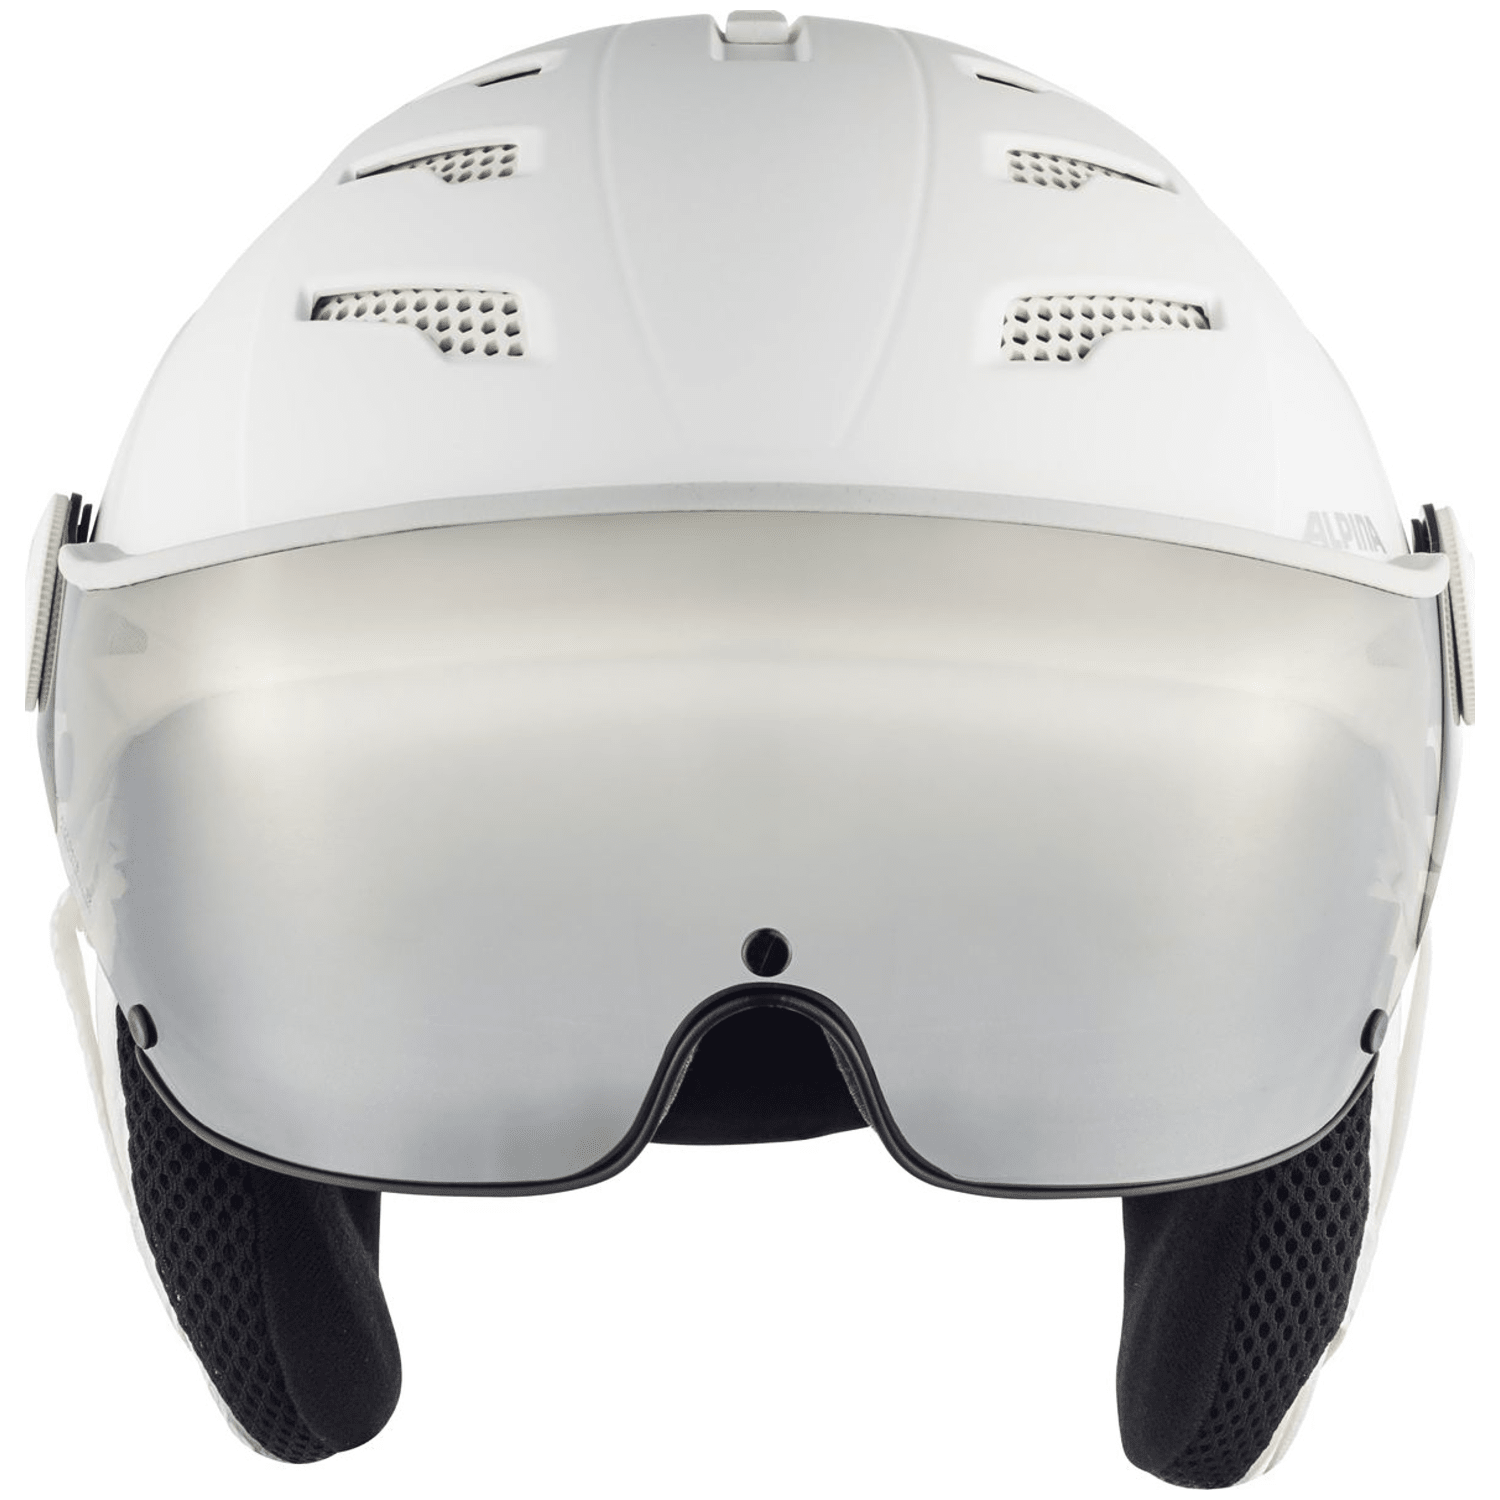 Alpina Jump 2.0 Q-Lite Helm Unisex